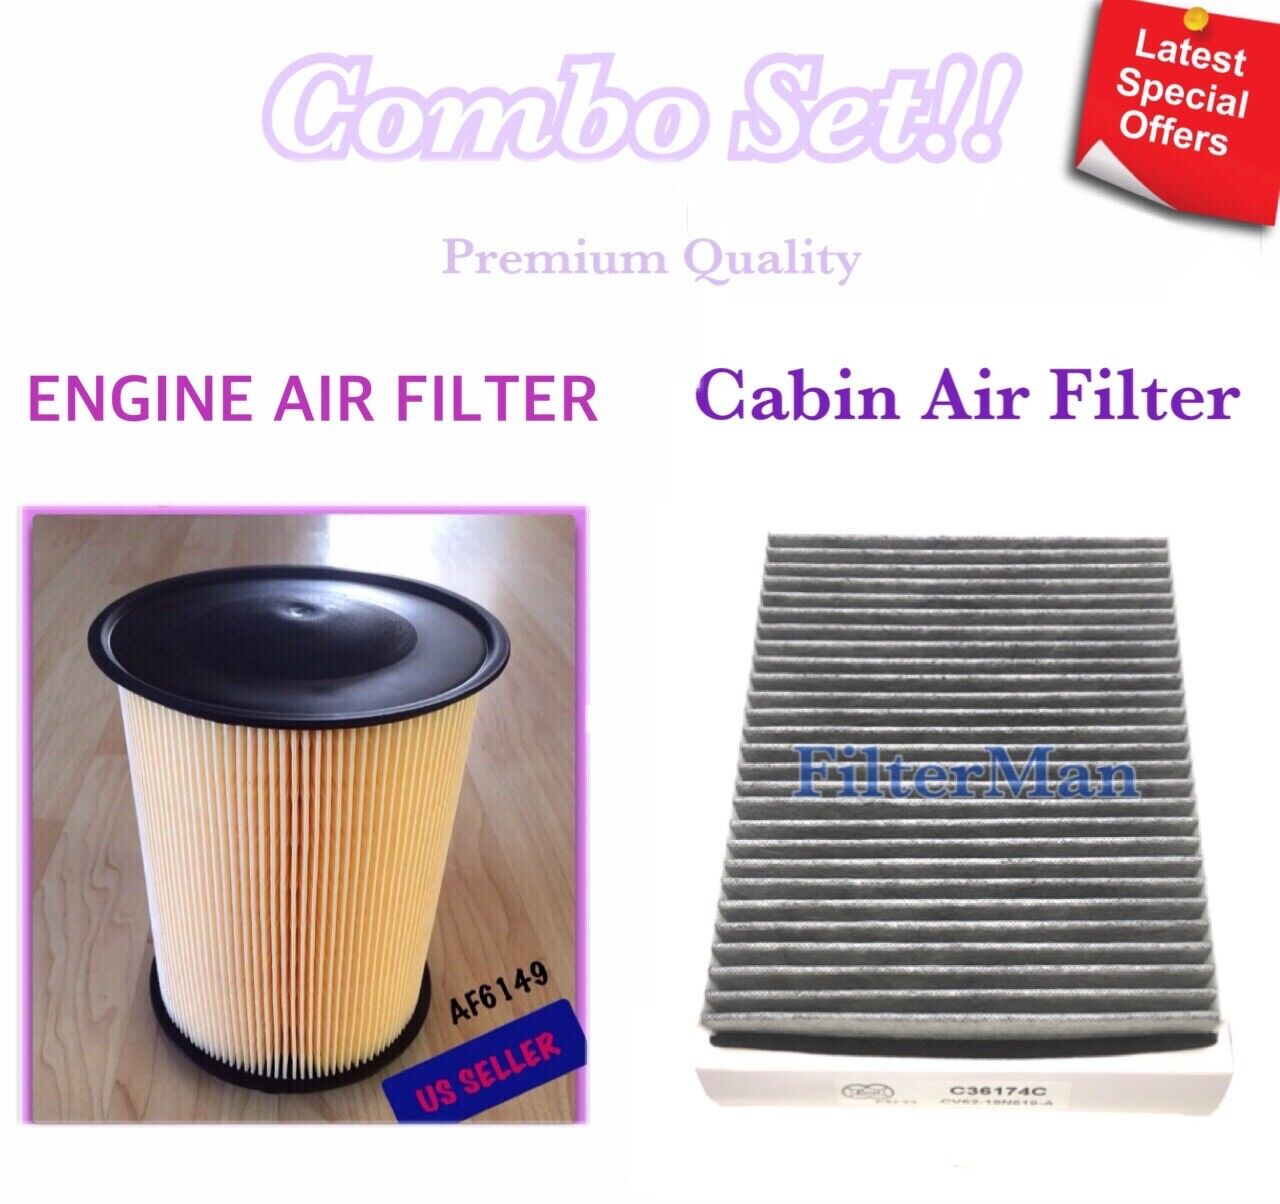 Engine&CARBONCabin Air Filter for 13-19 ESCAPE 12-18 FOCUS 14-16 TRANSIT CONNECT